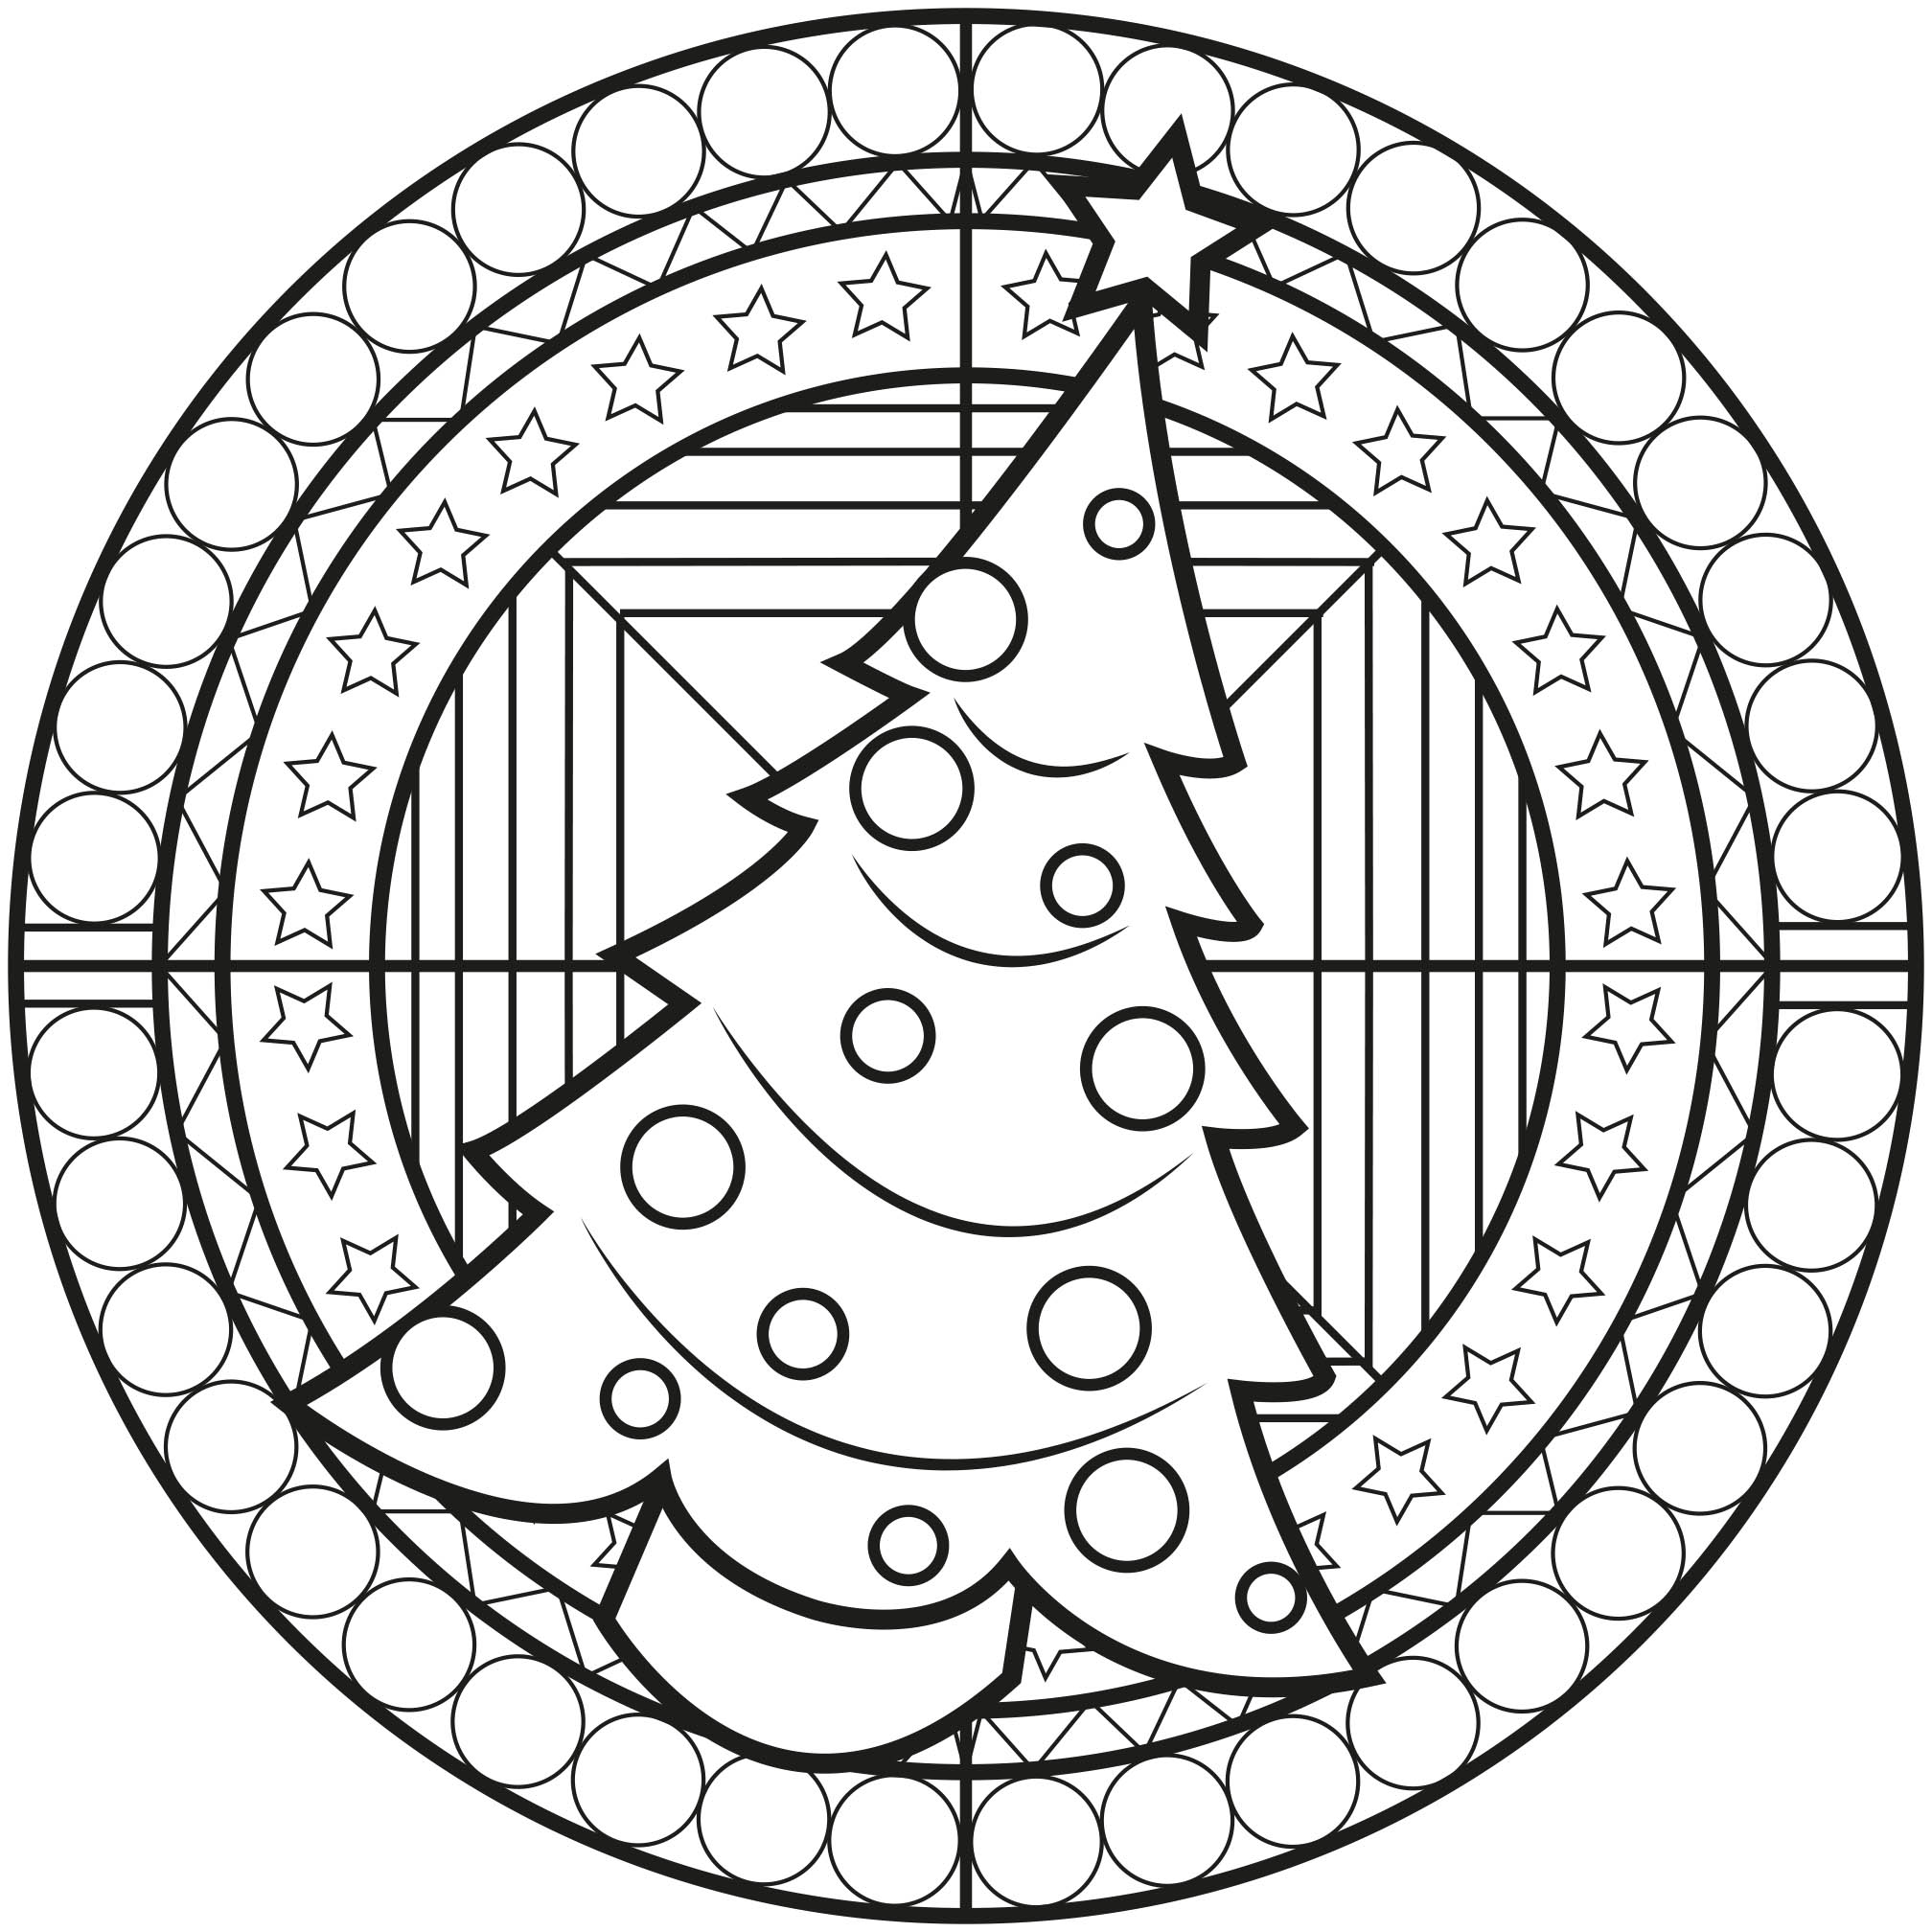 Chrstmas Mandala with a Christmas Tree  Mandalas Adult Coloring Pages